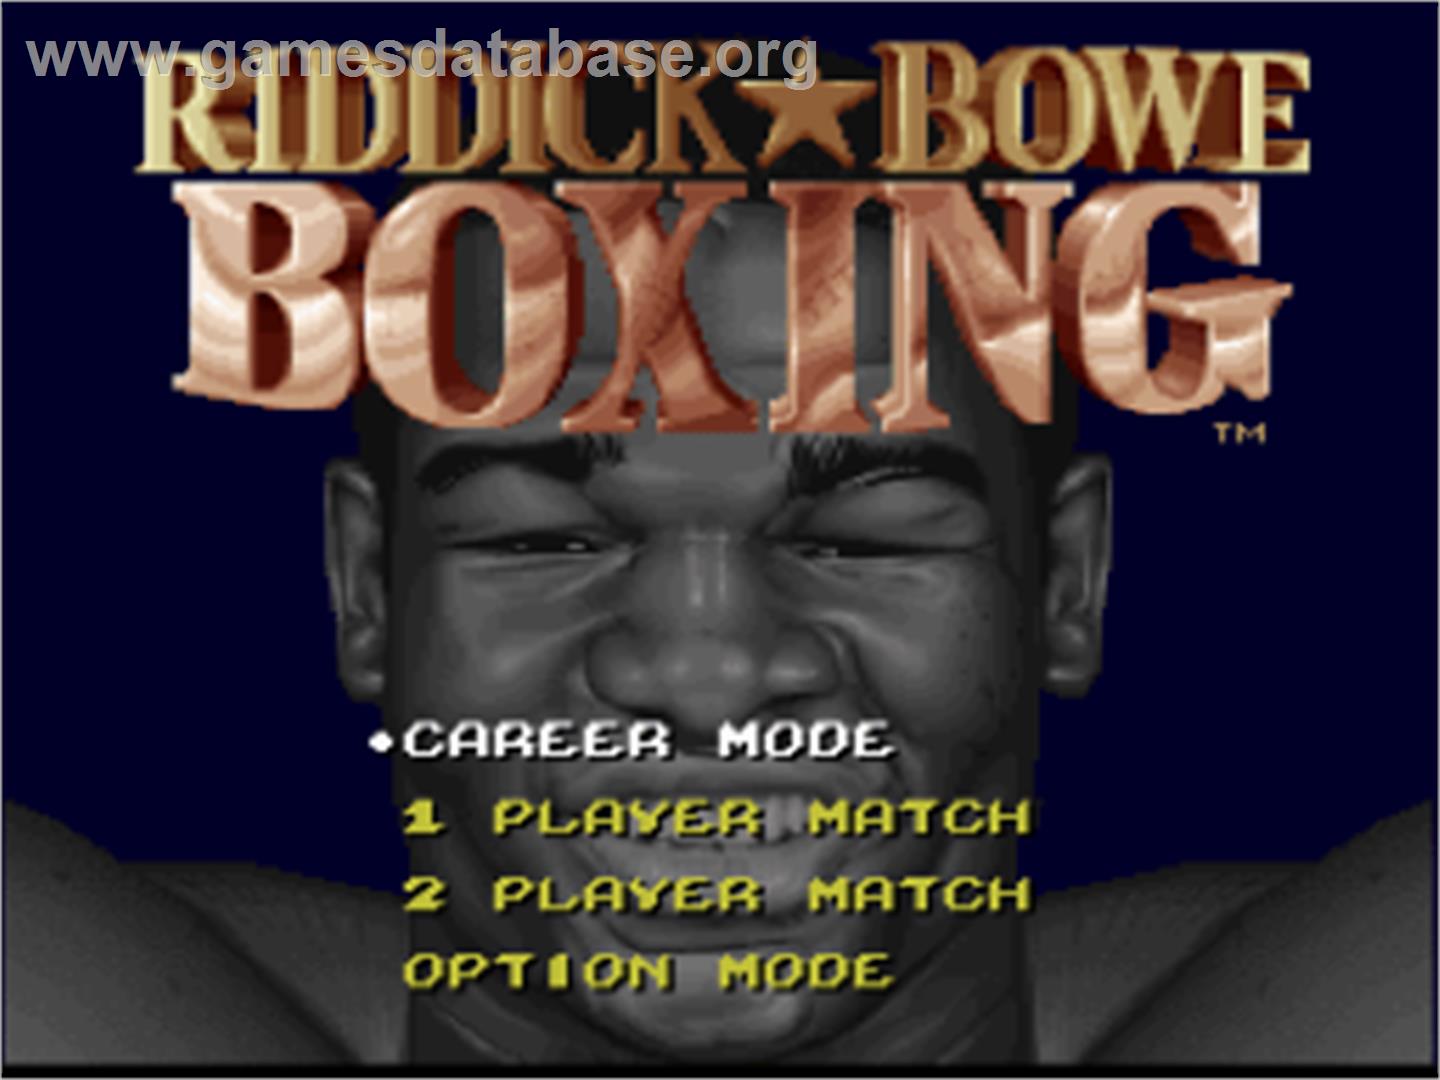 Riddick Bowe Boxing - Nintendo SNES - Artwork - Title Screen